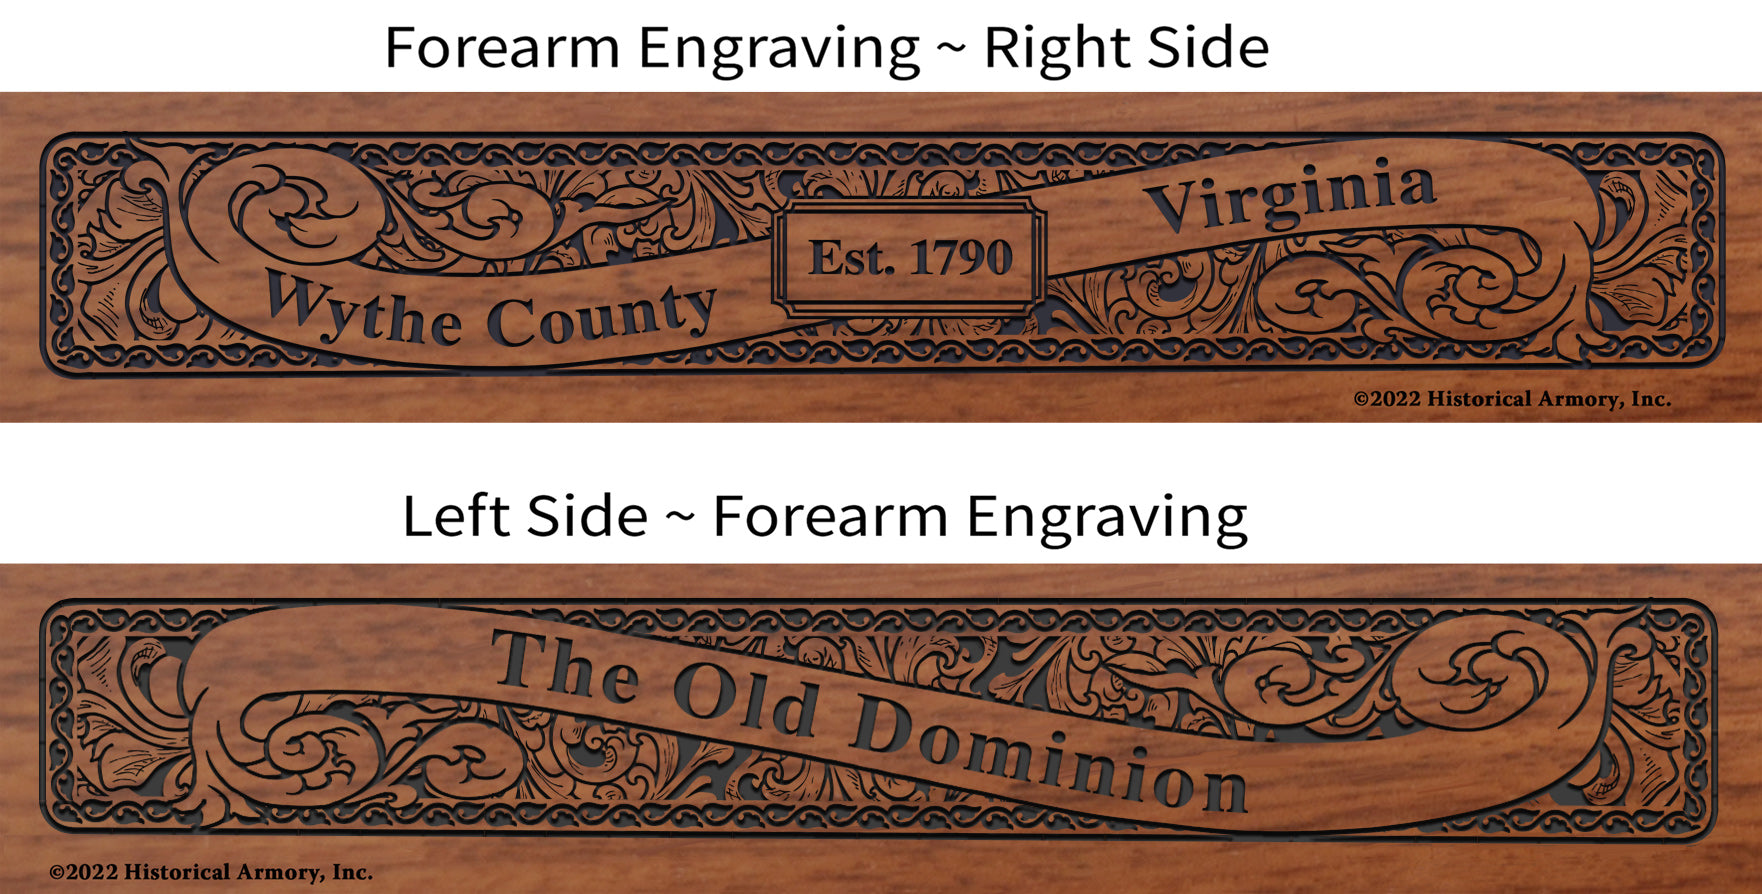 Wythe County Virginia Engraved Rifle Forearm